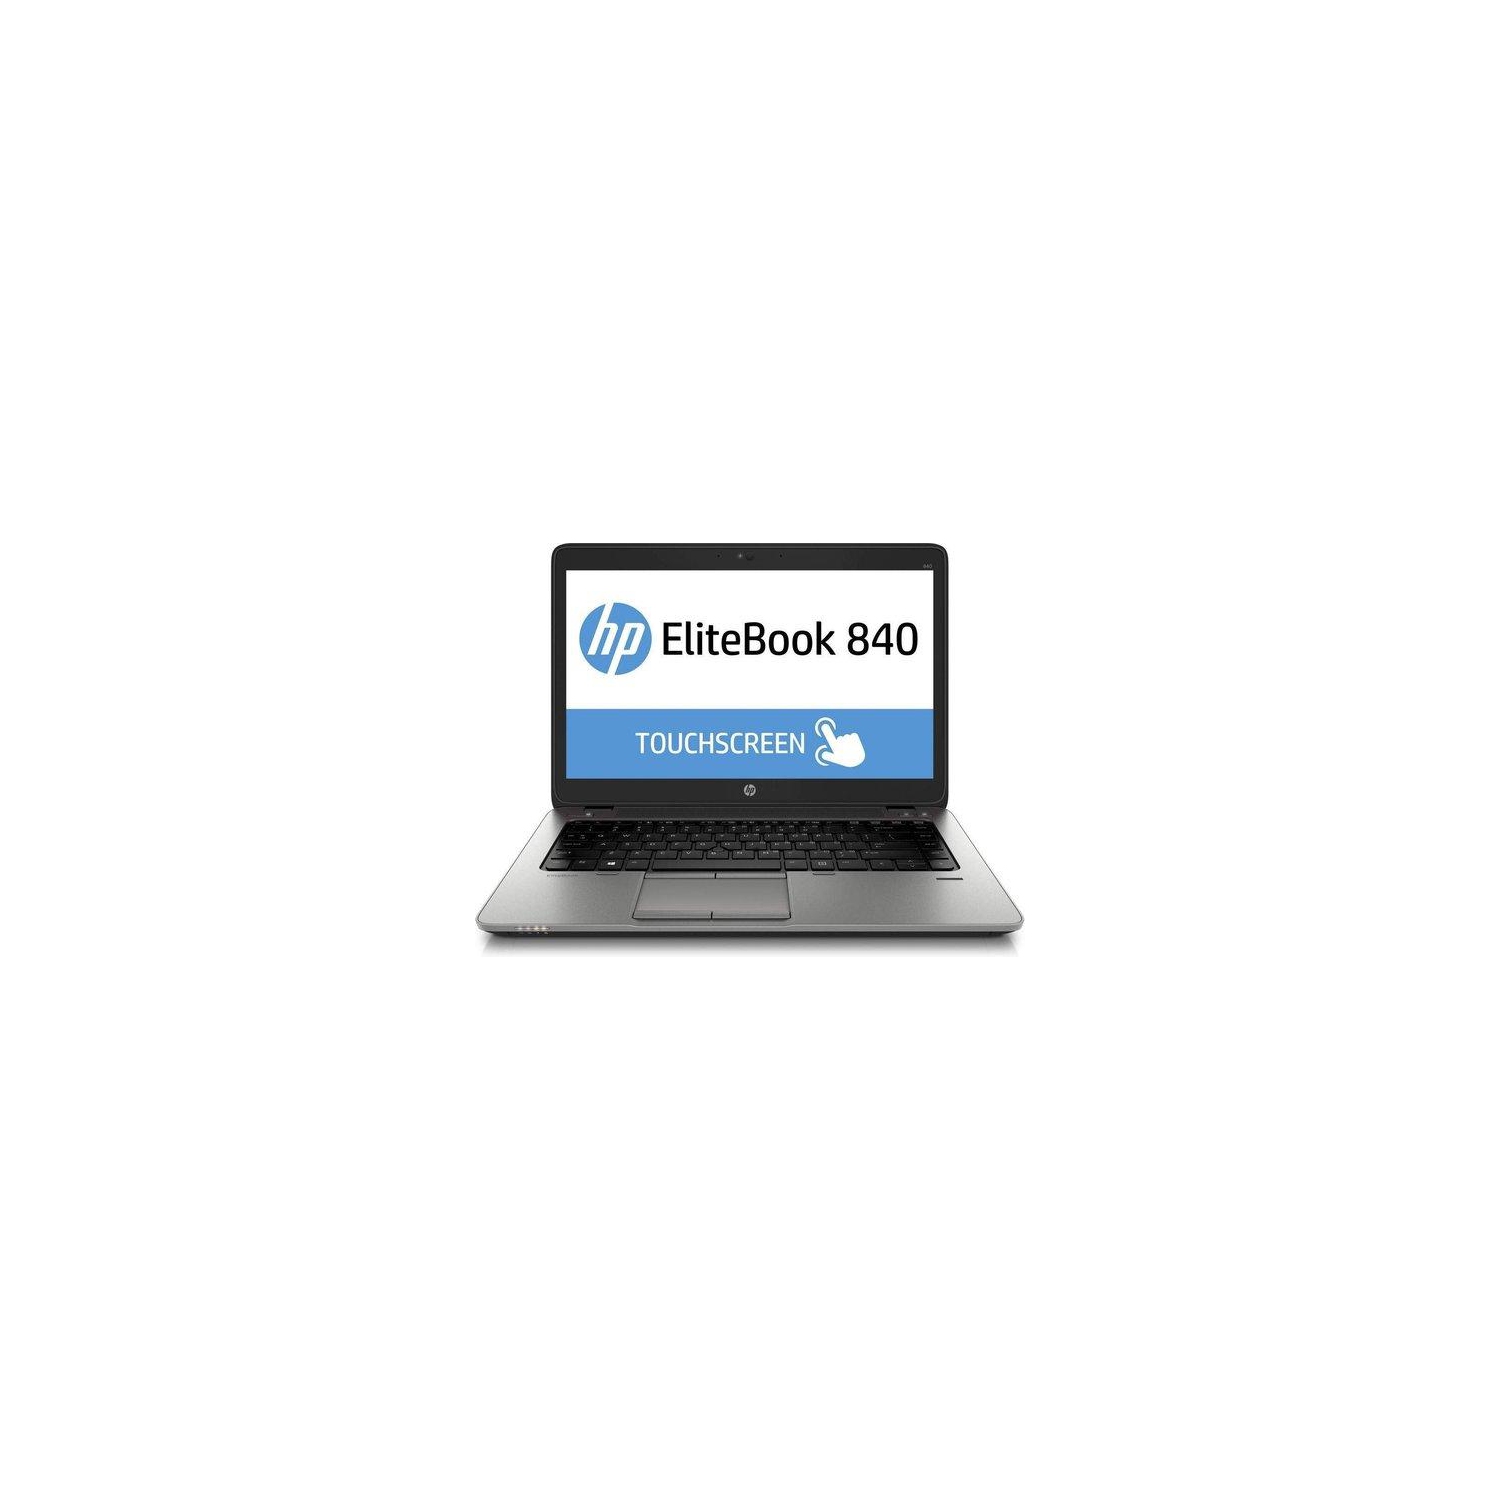 Refurbished (Good) - HP EliteBook 840 G3 14" FHD Touchscreen Business Laptop: i5-6200u 2.3GHz; 16G RAM; 256G SSD; Webcam; Backlit Keyboard, Win10 pro "â€œ